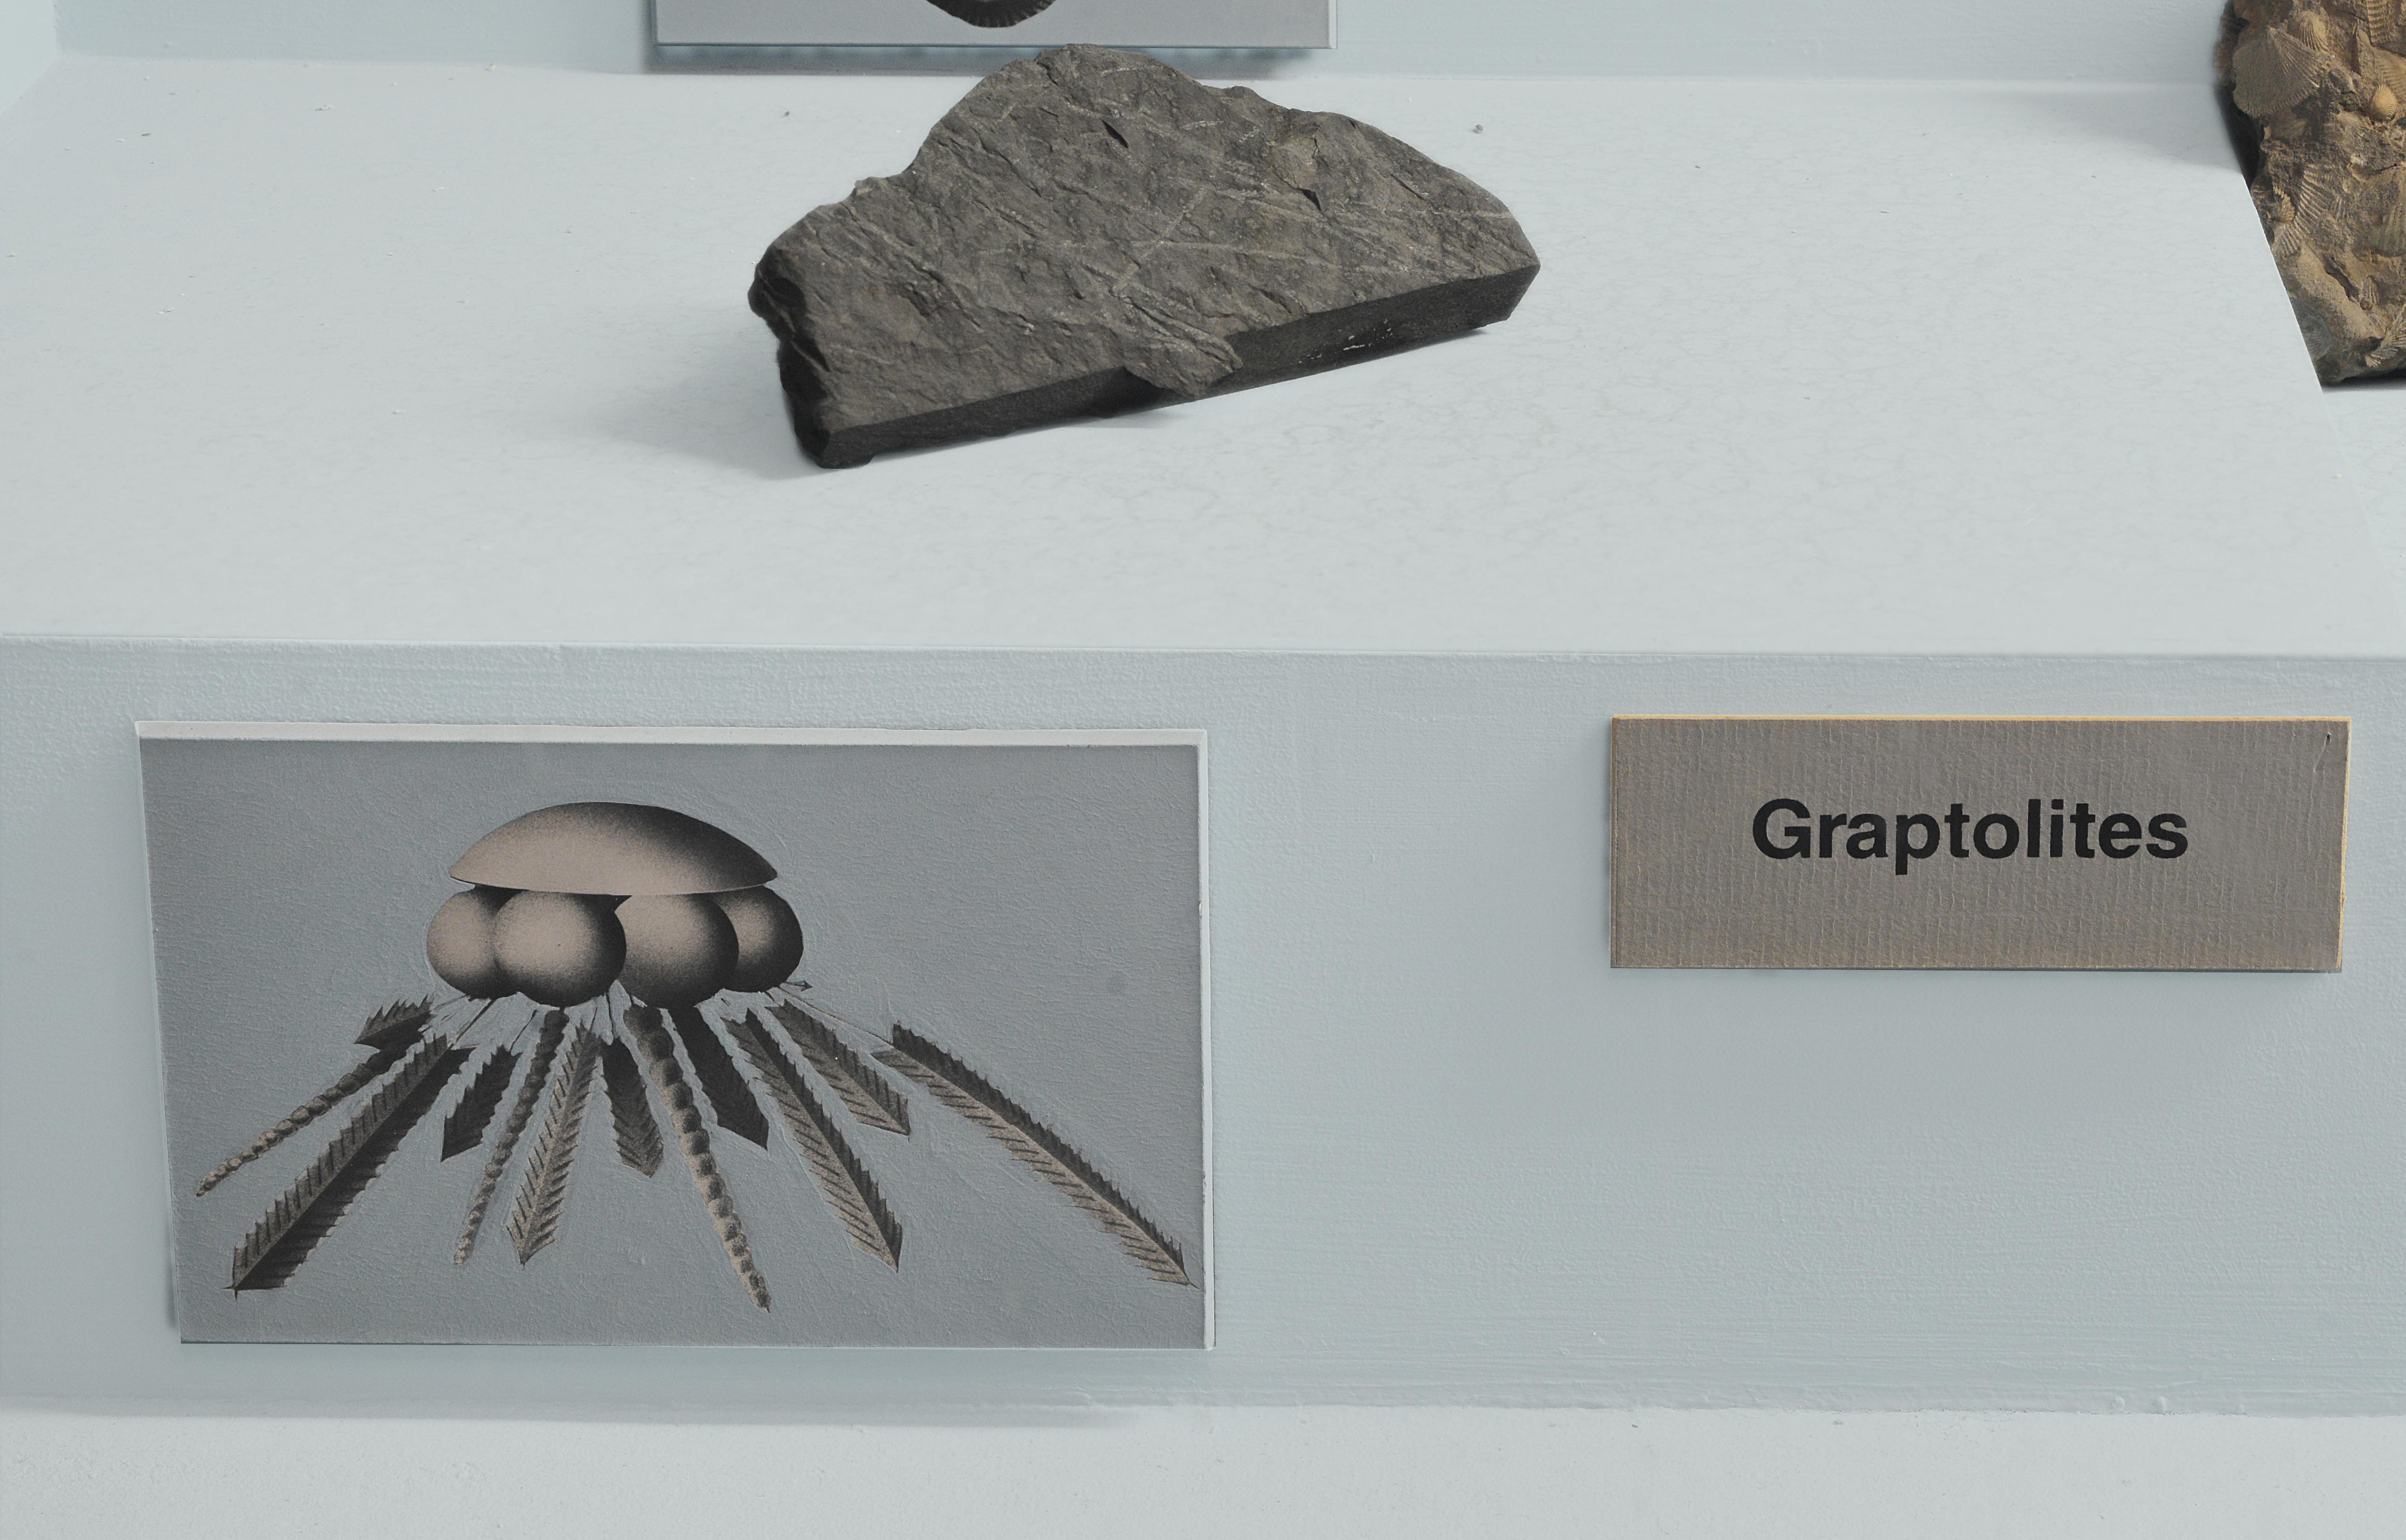 Fossil and illustration of graptolites